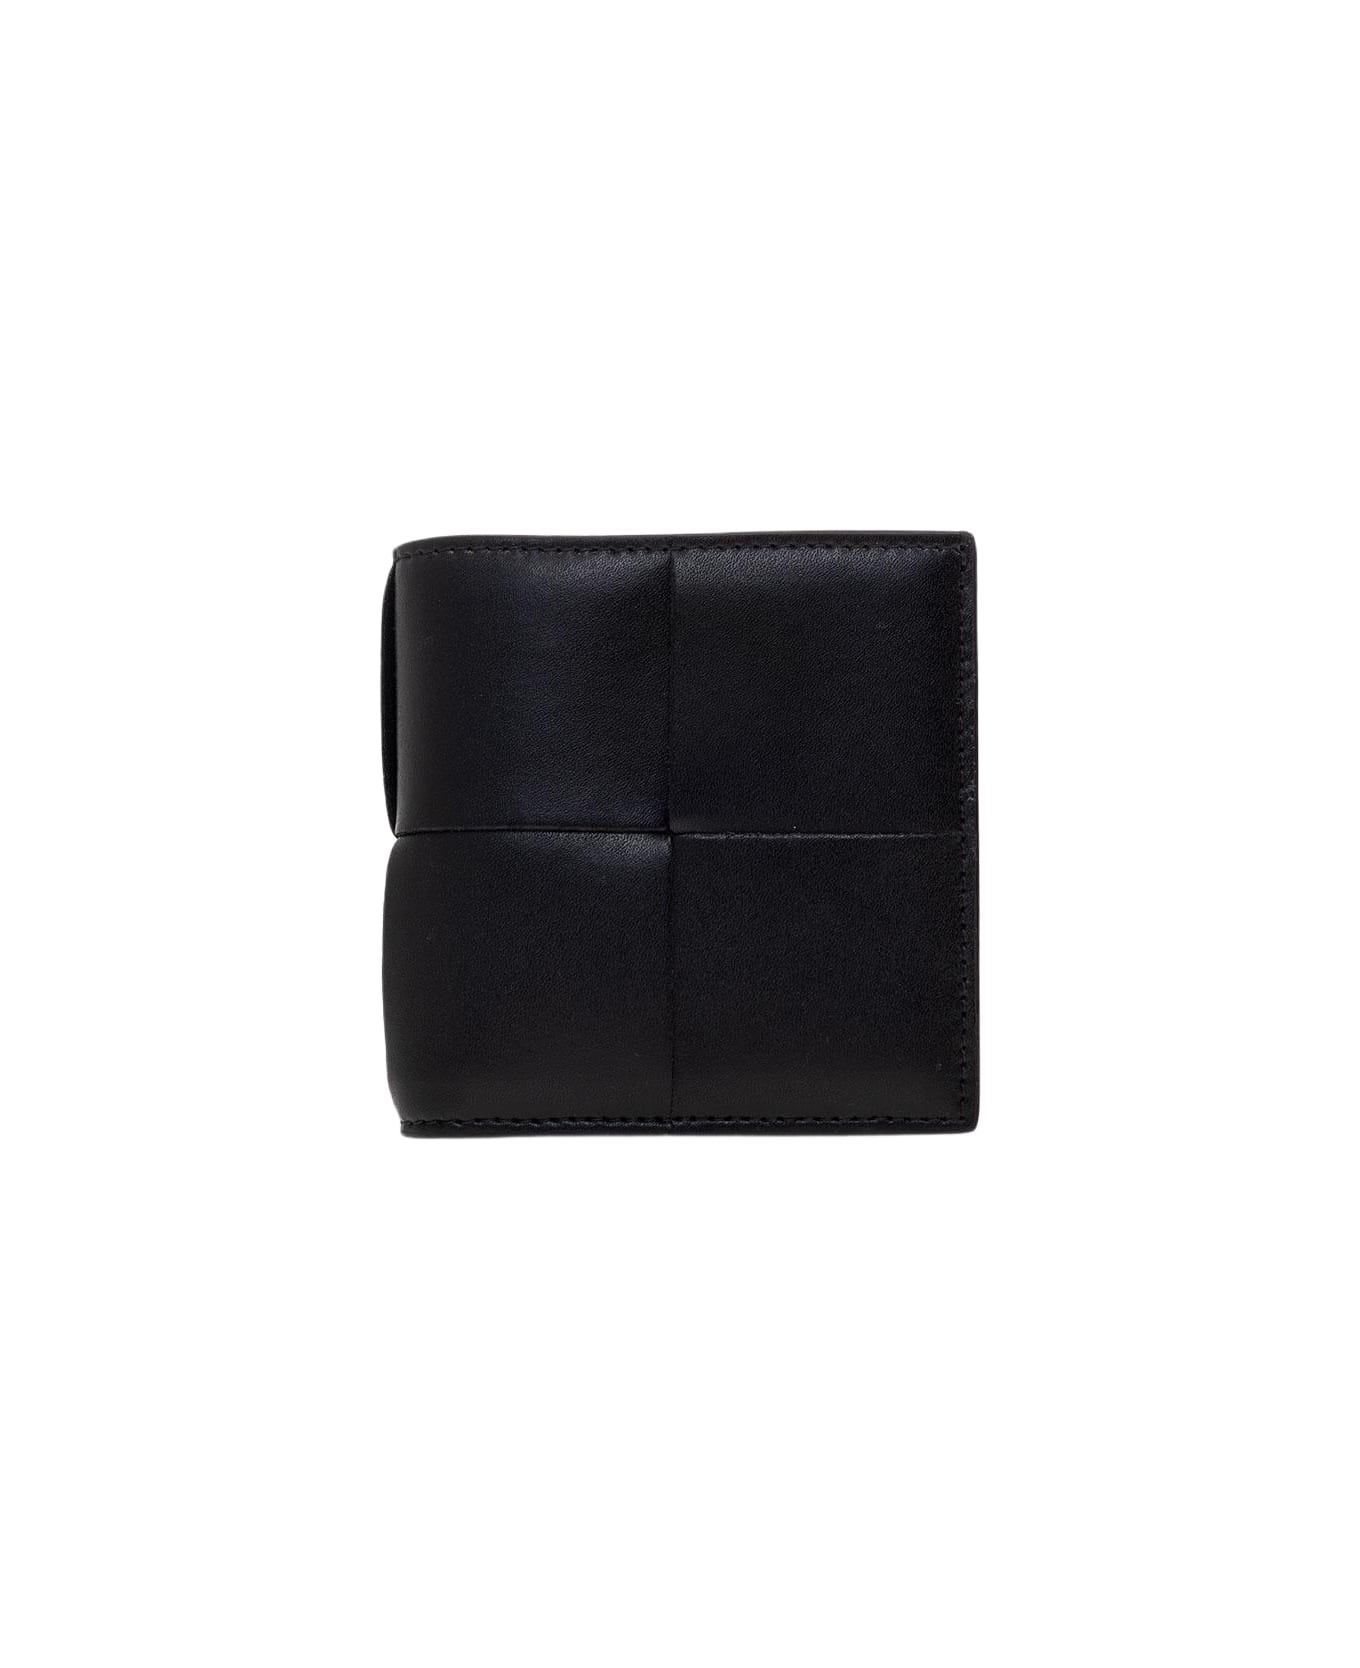 Bottega Veneta Leather Folding Wallet - Black Silver